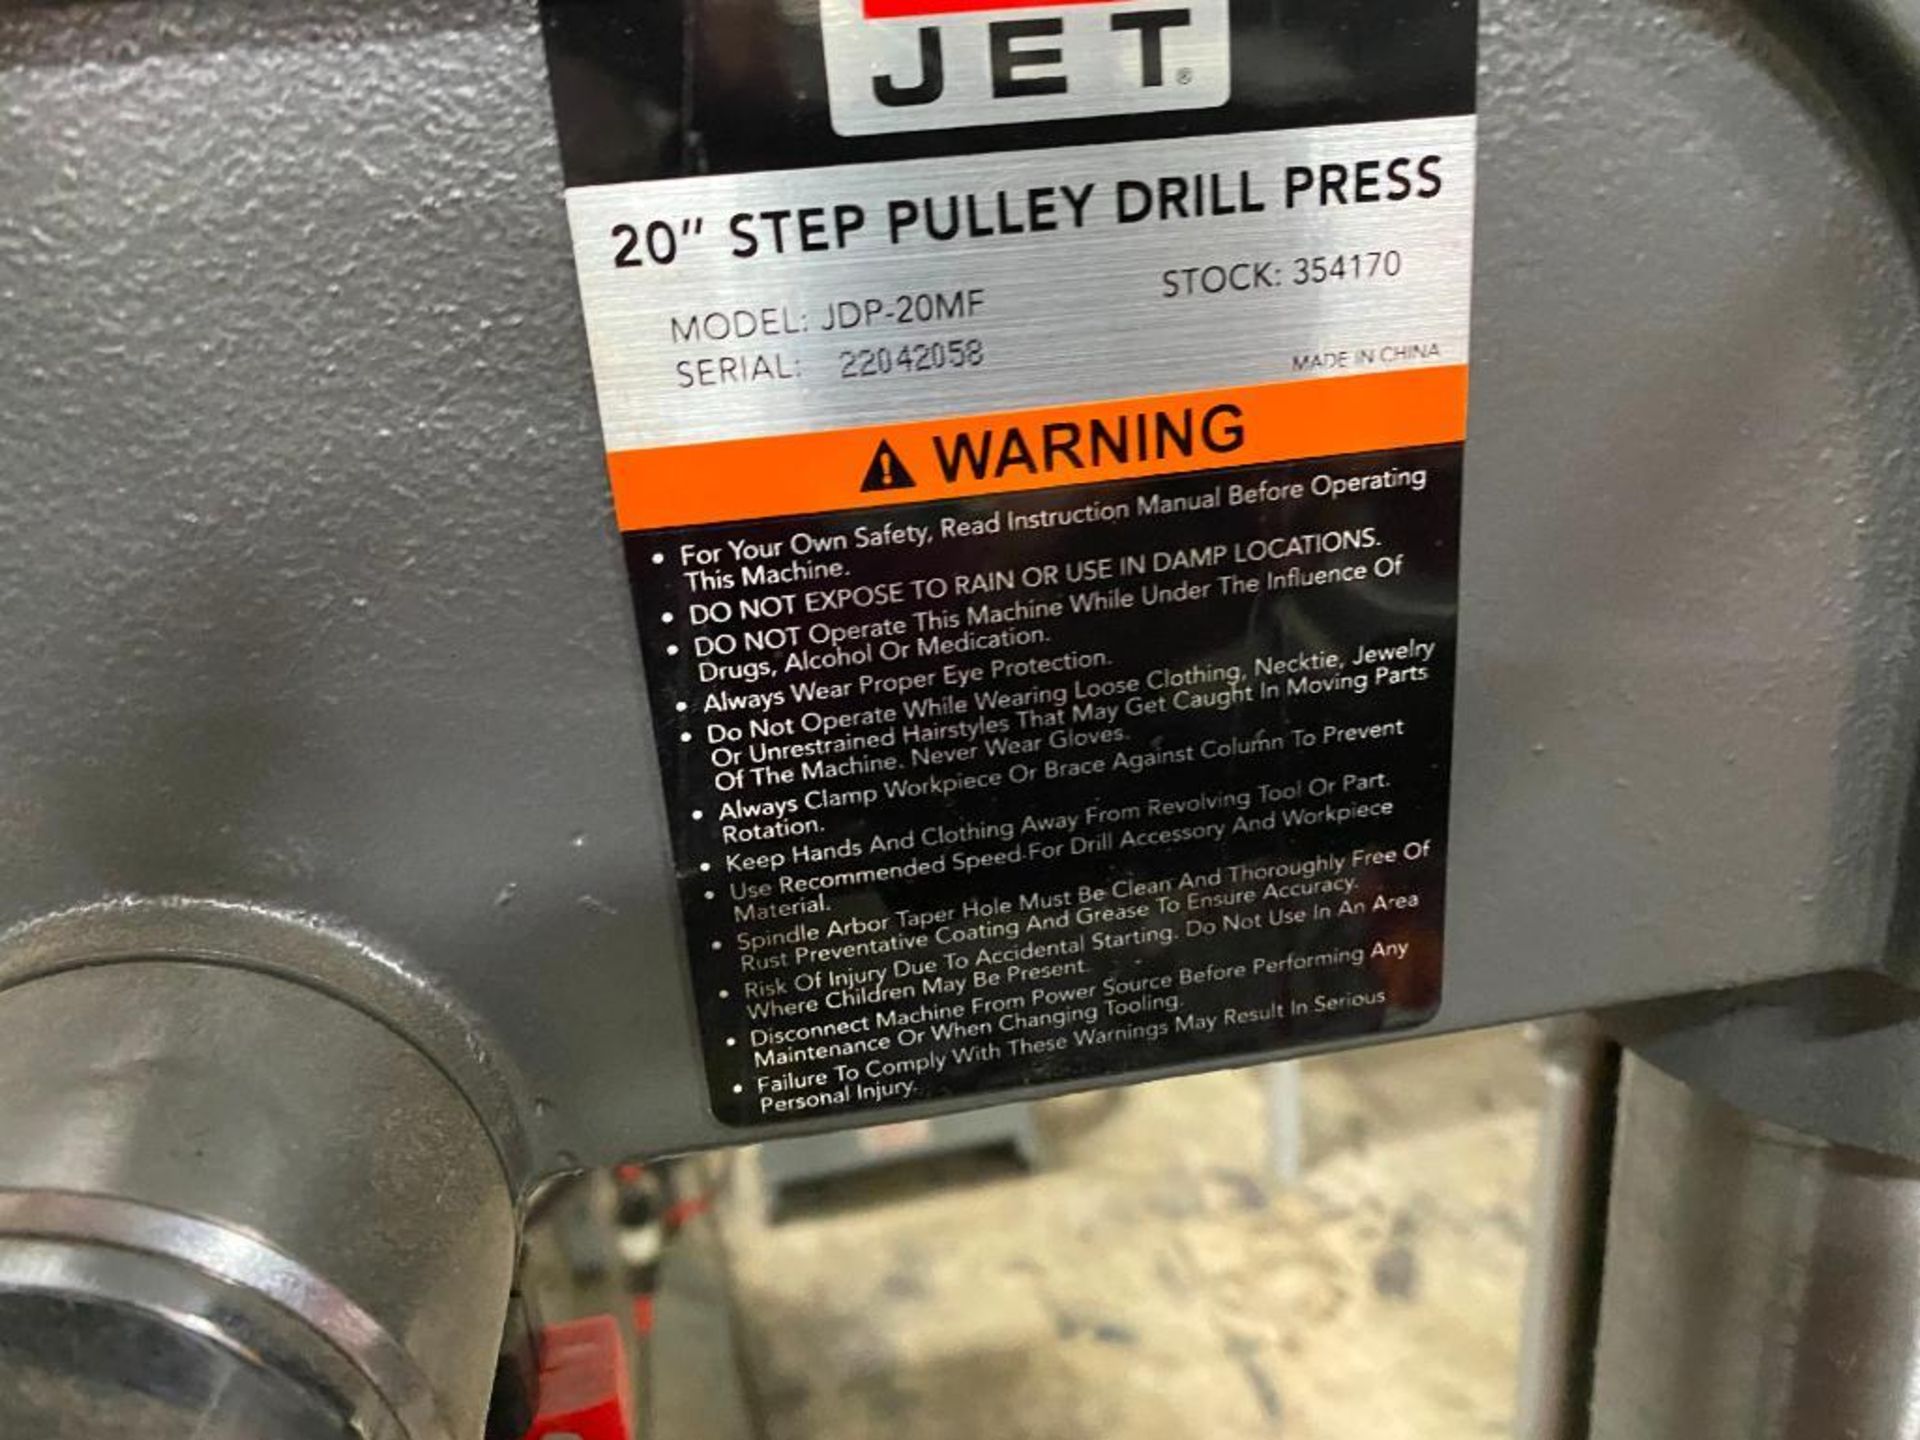 Jet Drill Press, 20", Model JDP-20MF, S/N 22042058, 1-1/2 HP, 115/230 V, 5/8" Chuck, Variable Speed, - Image 2 of 2